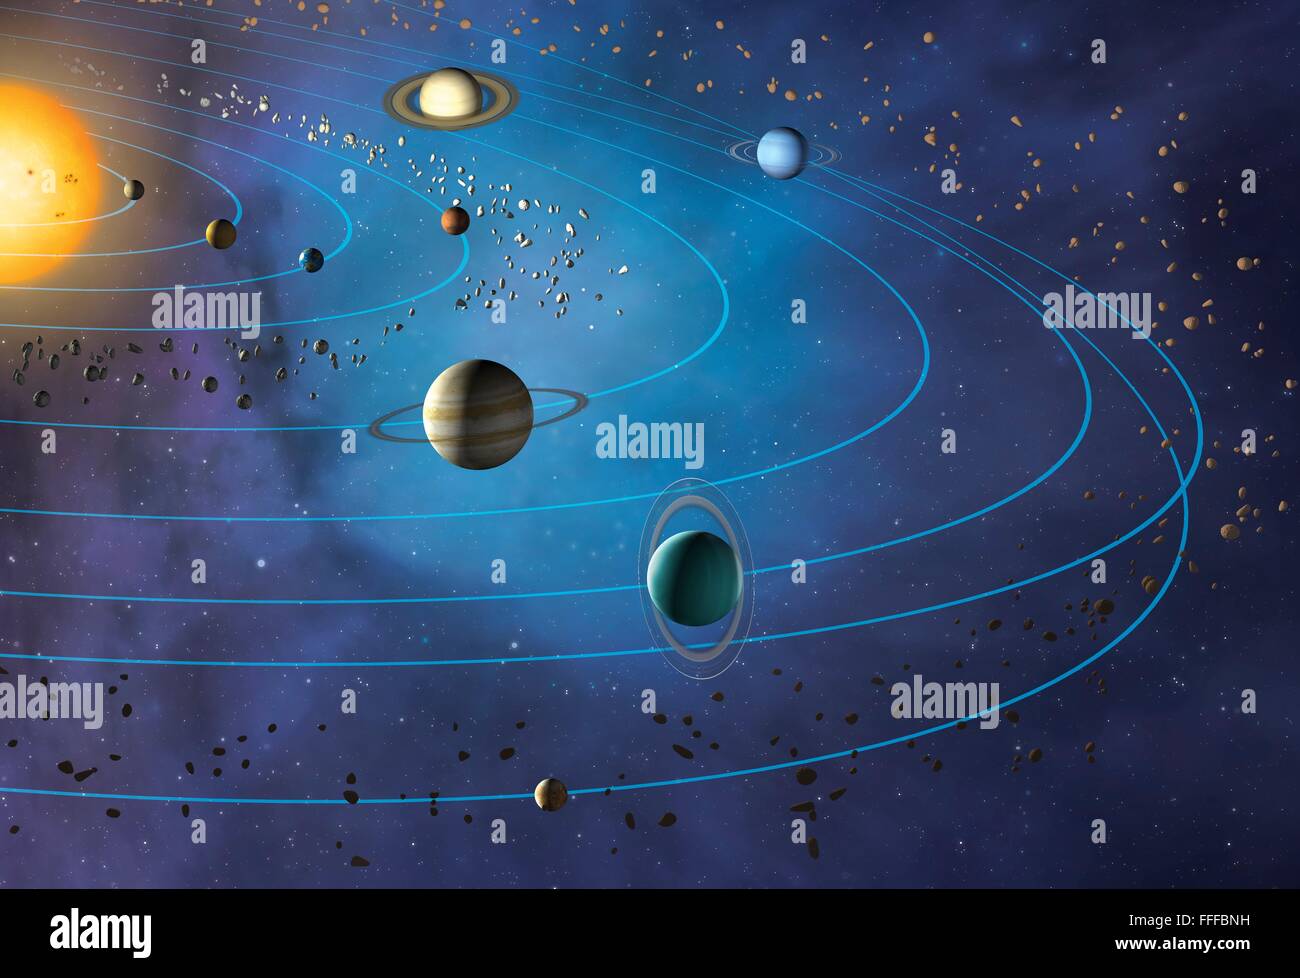 Ocho planetas fotografías e imágenes de alta resolución - Alamy